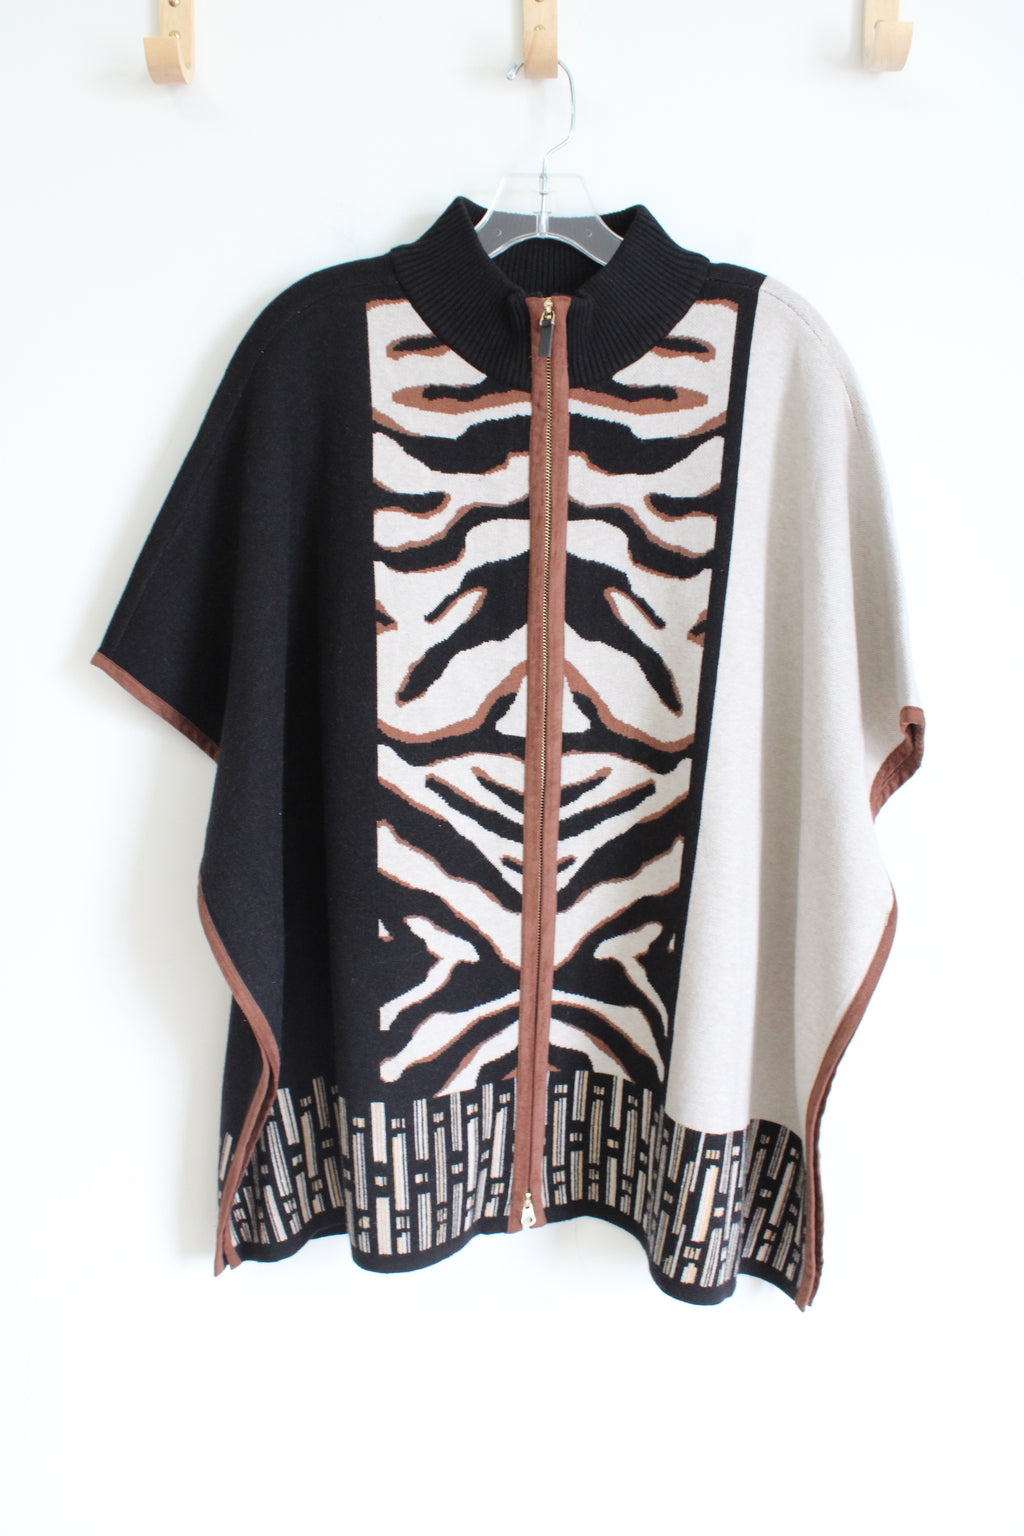 Chico's Black Tan Zebra Print Heavy Knit Poncho Jacket | S/M